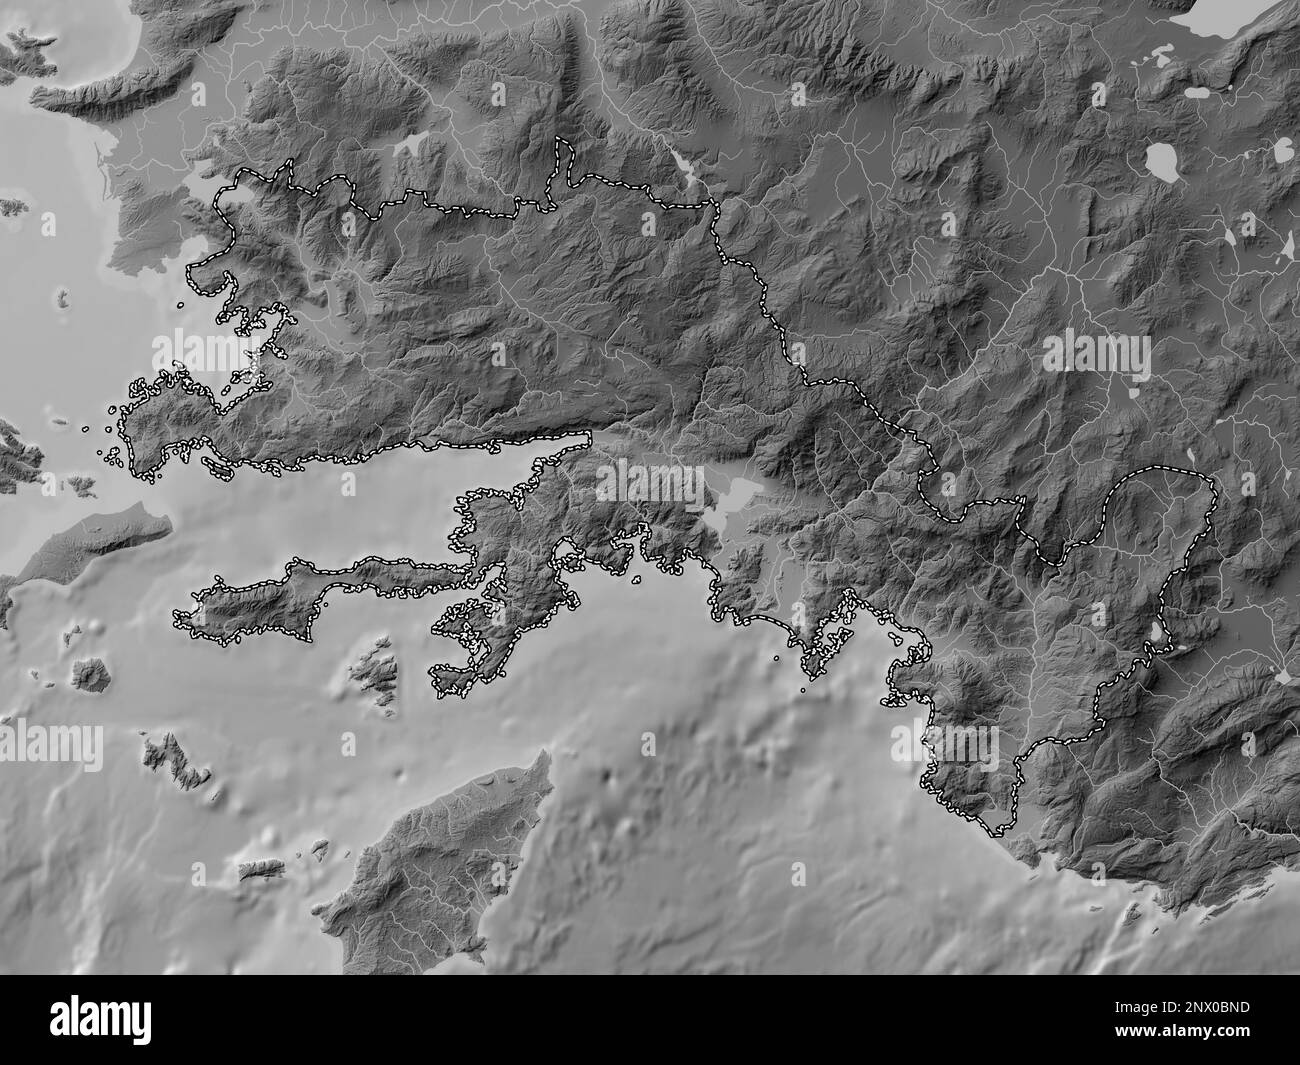 Mugla, province of Turkiye. Grayscale elevation map with lakes and rivers Stock Photo